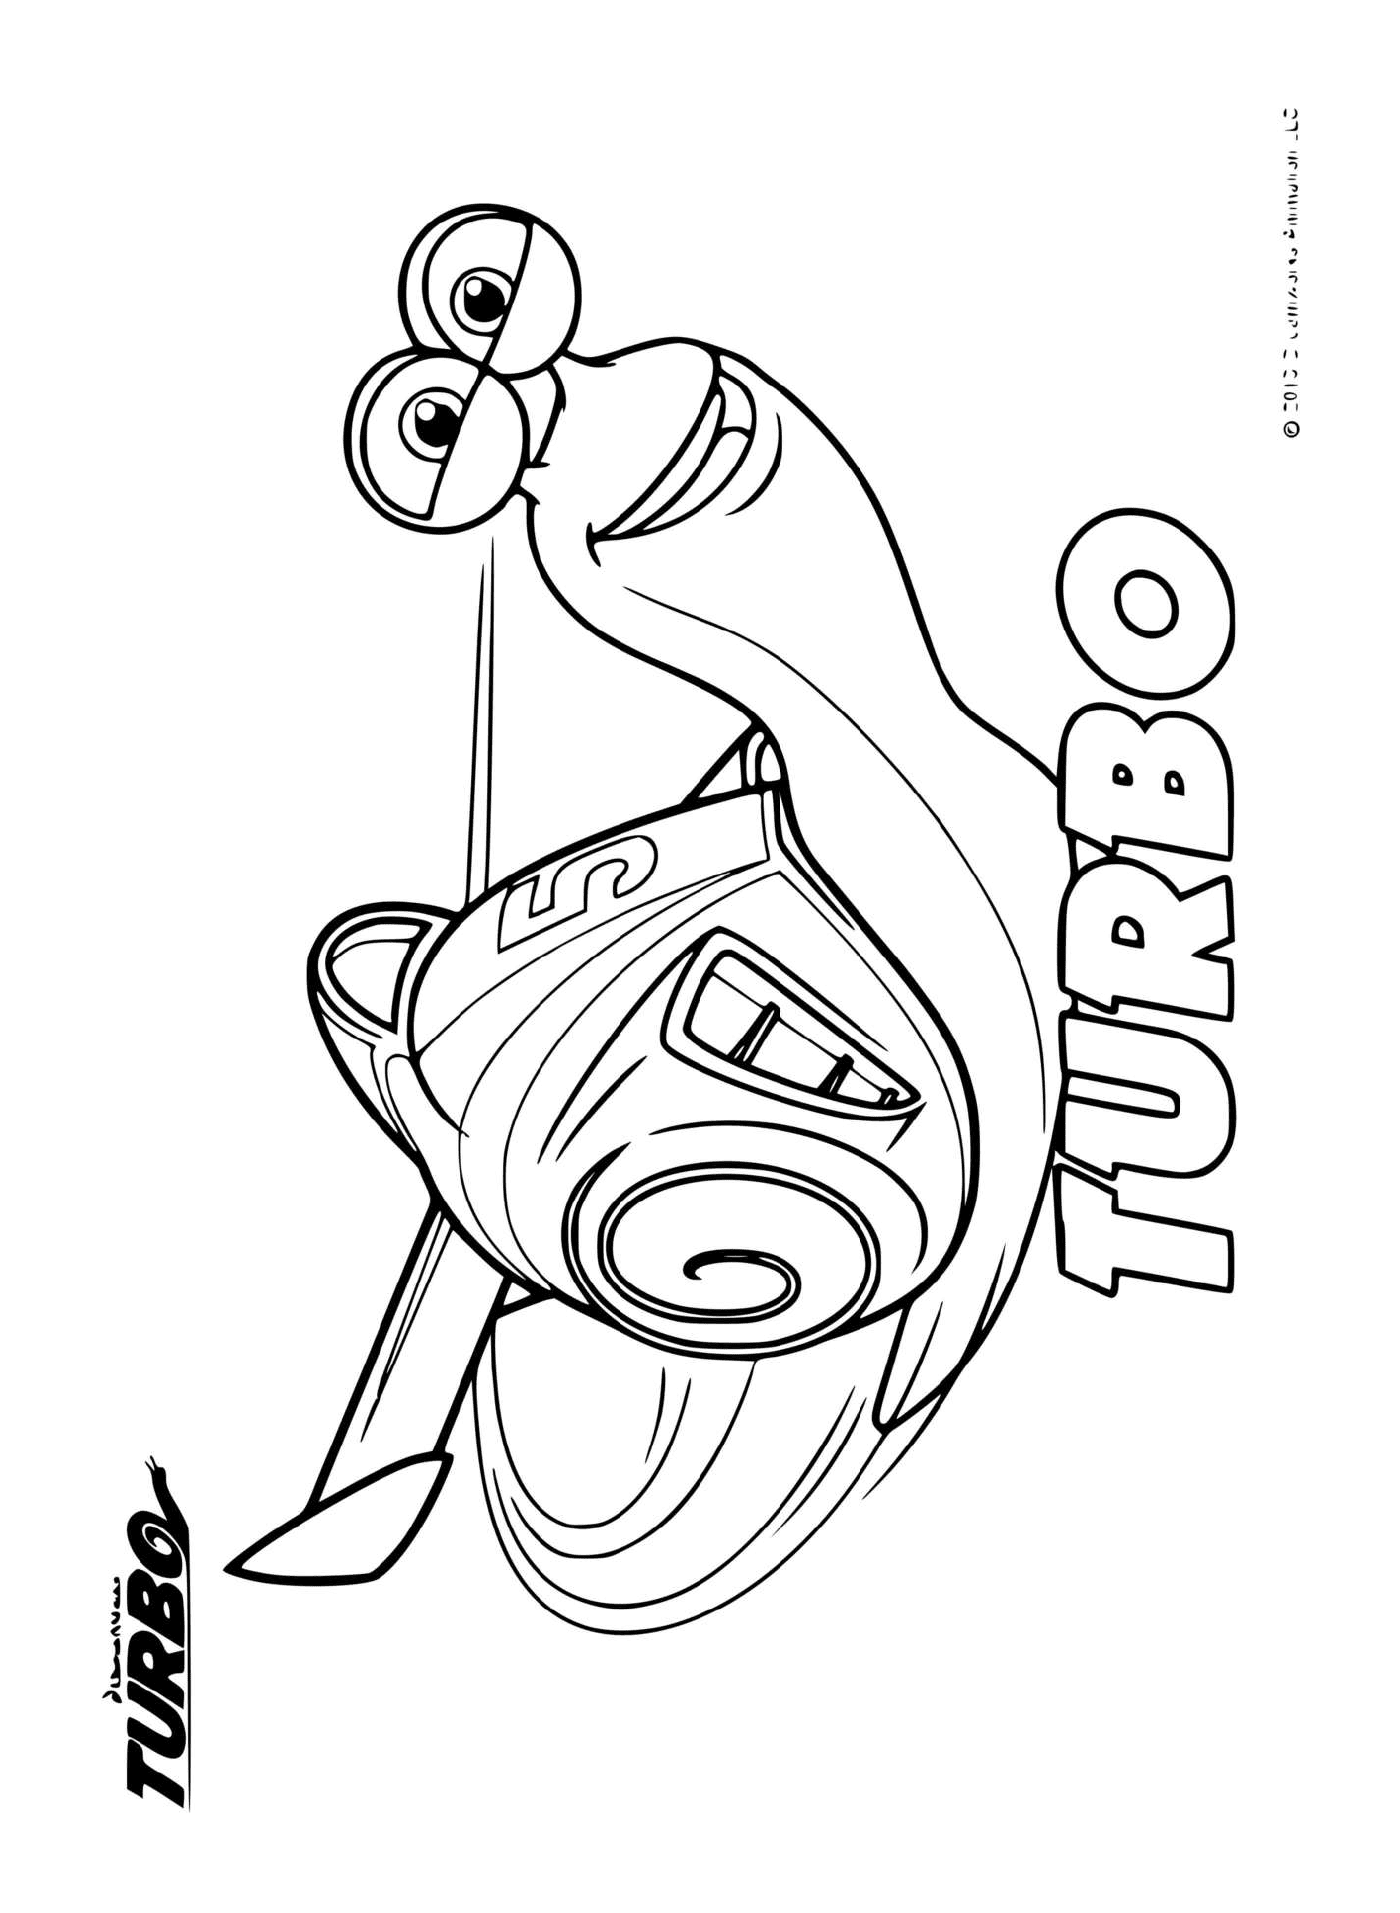  Turbo, caracol rápido da Dreamworks 